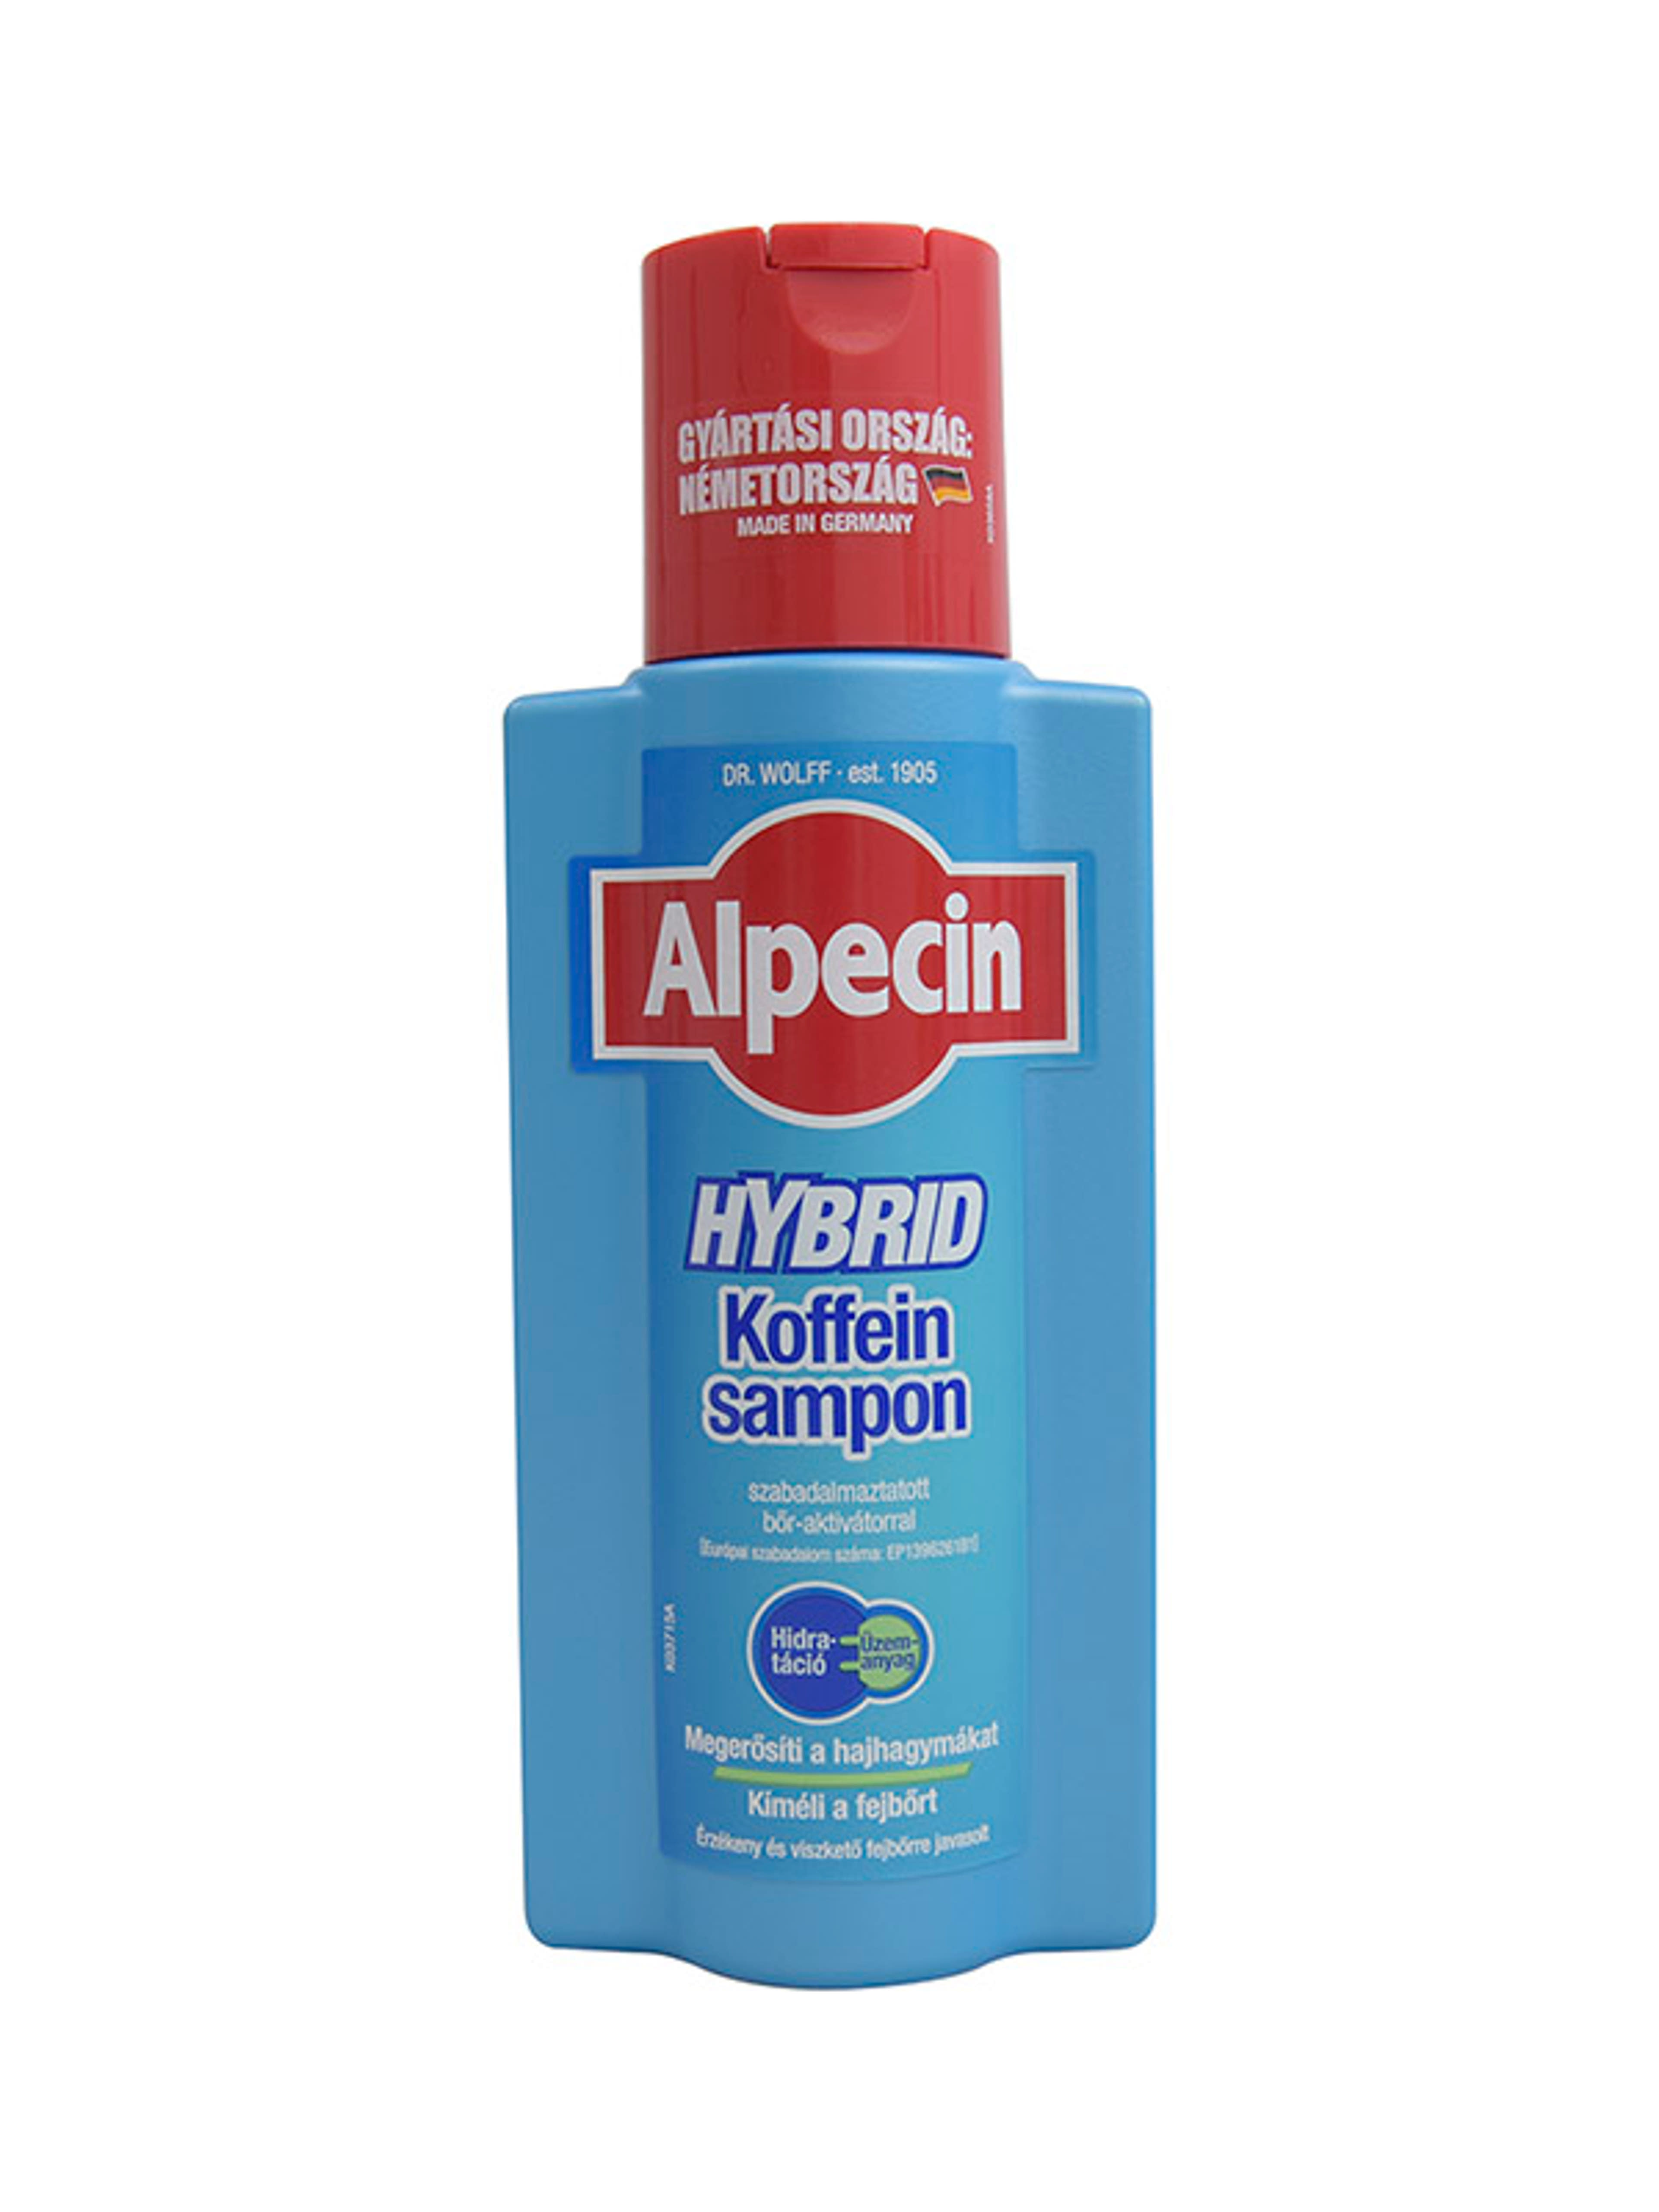 Alpecin Hybrid Koffein sampon - 250 ml